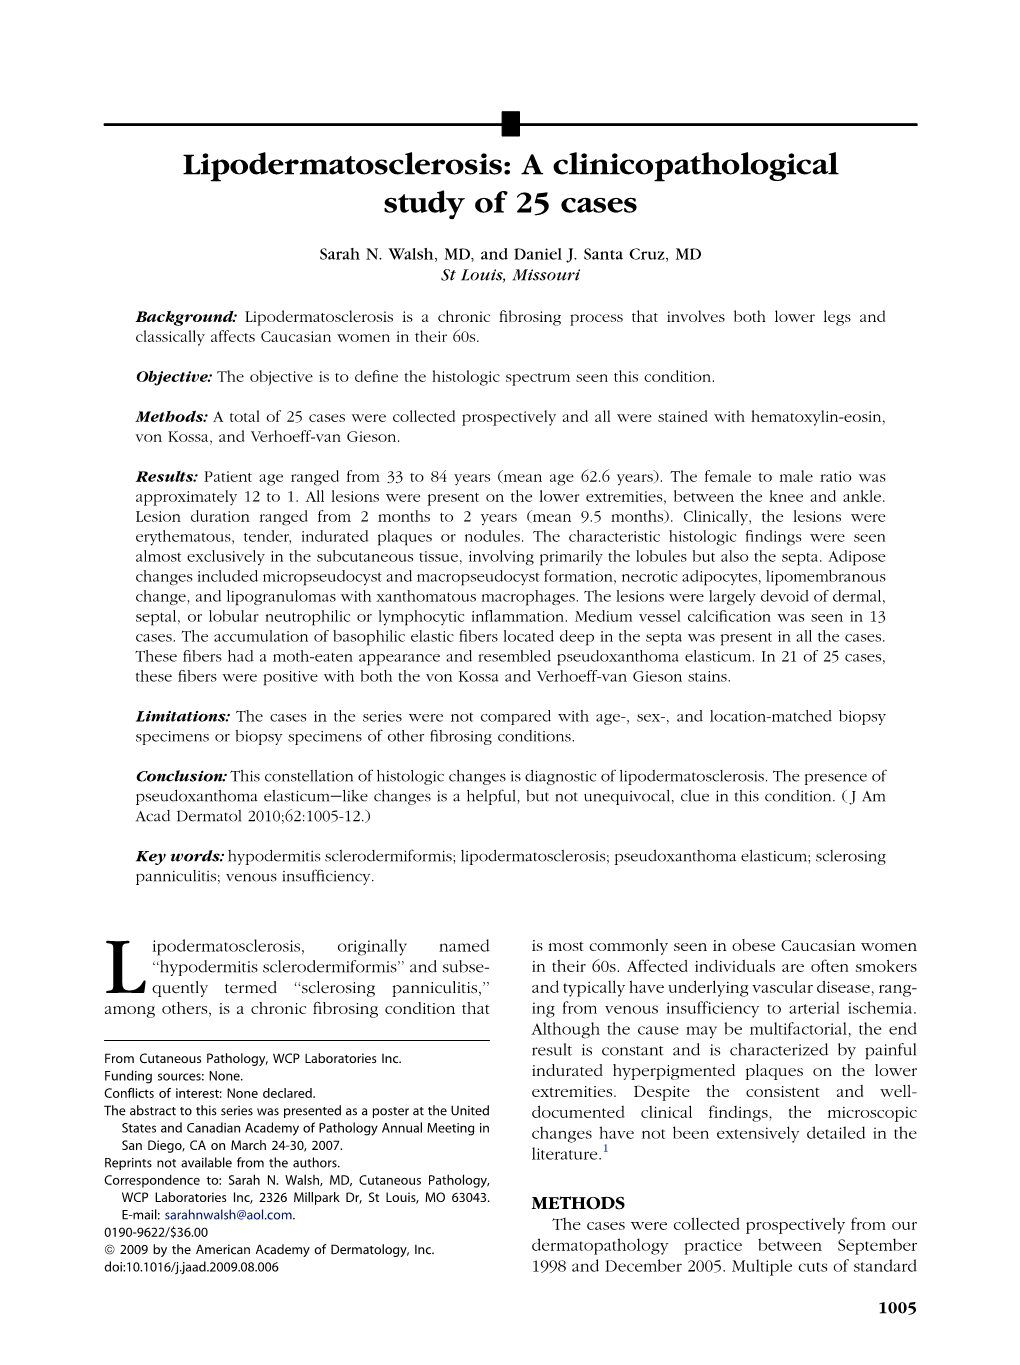 Lipodermatosclerosis: a Clinicopathological Study of 25 Cases